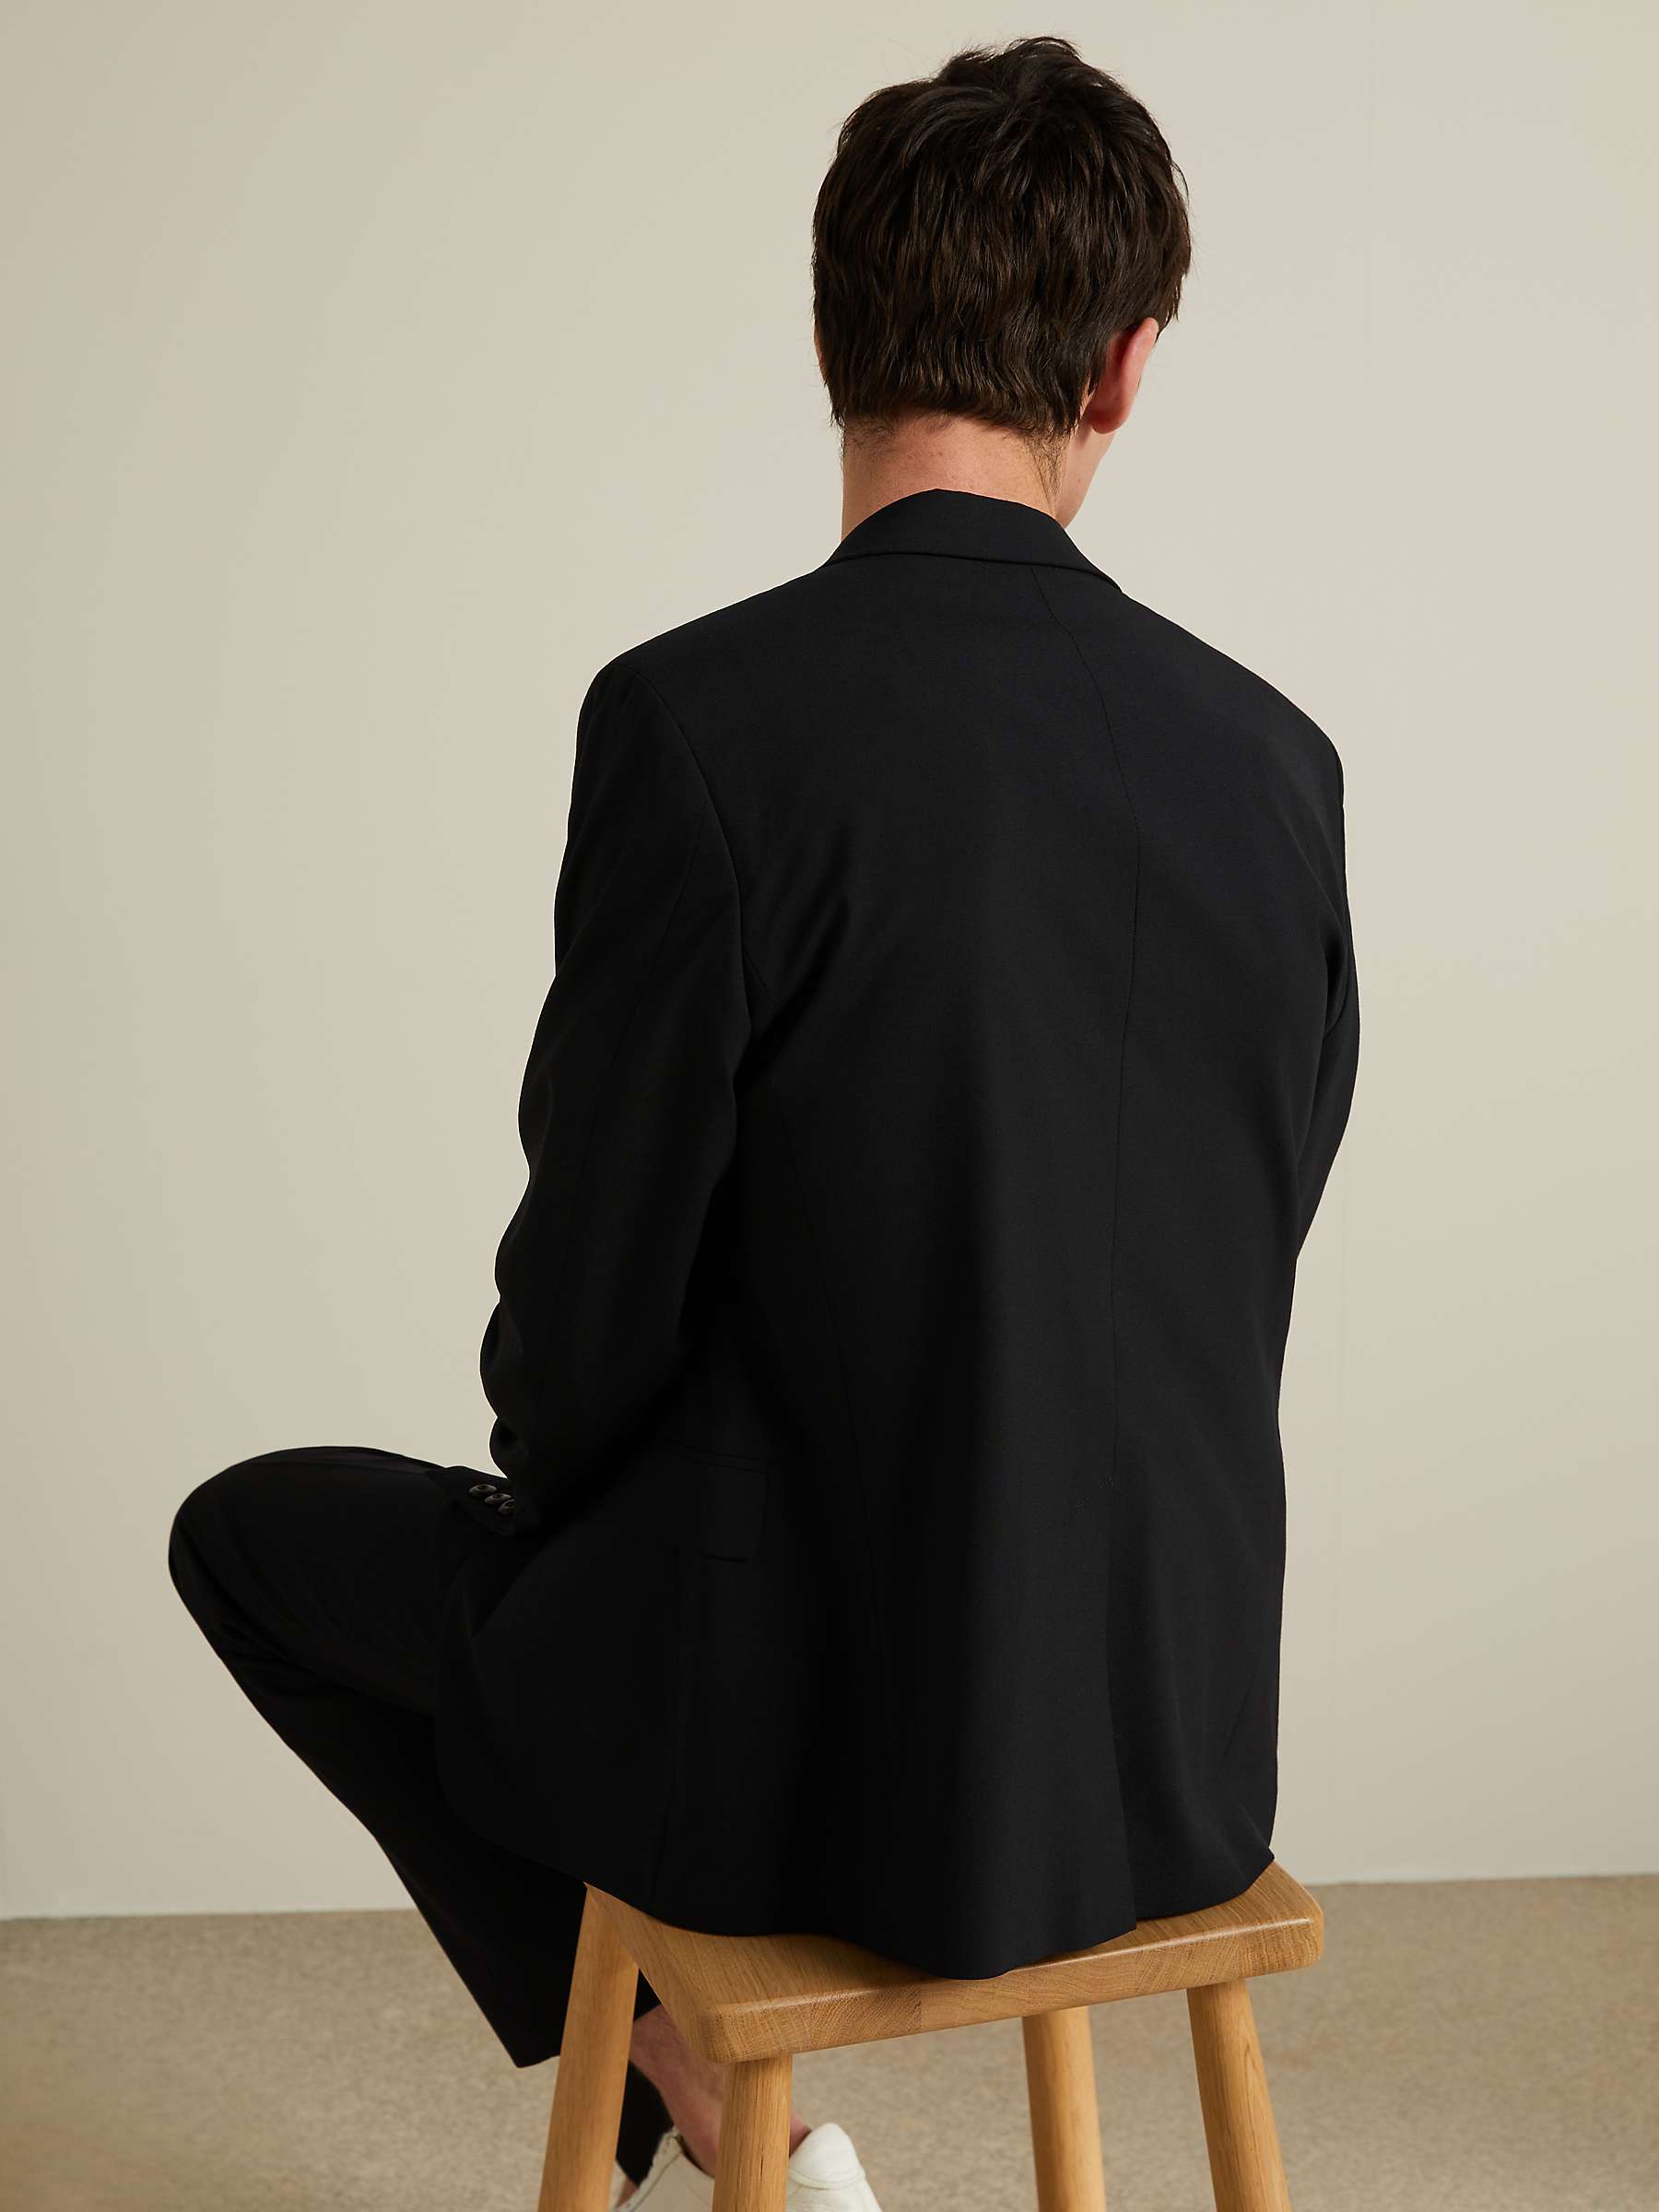 Buy John Lewis Made with Care Slim Fit Suit Jacket, Black Online at johnlewis.com